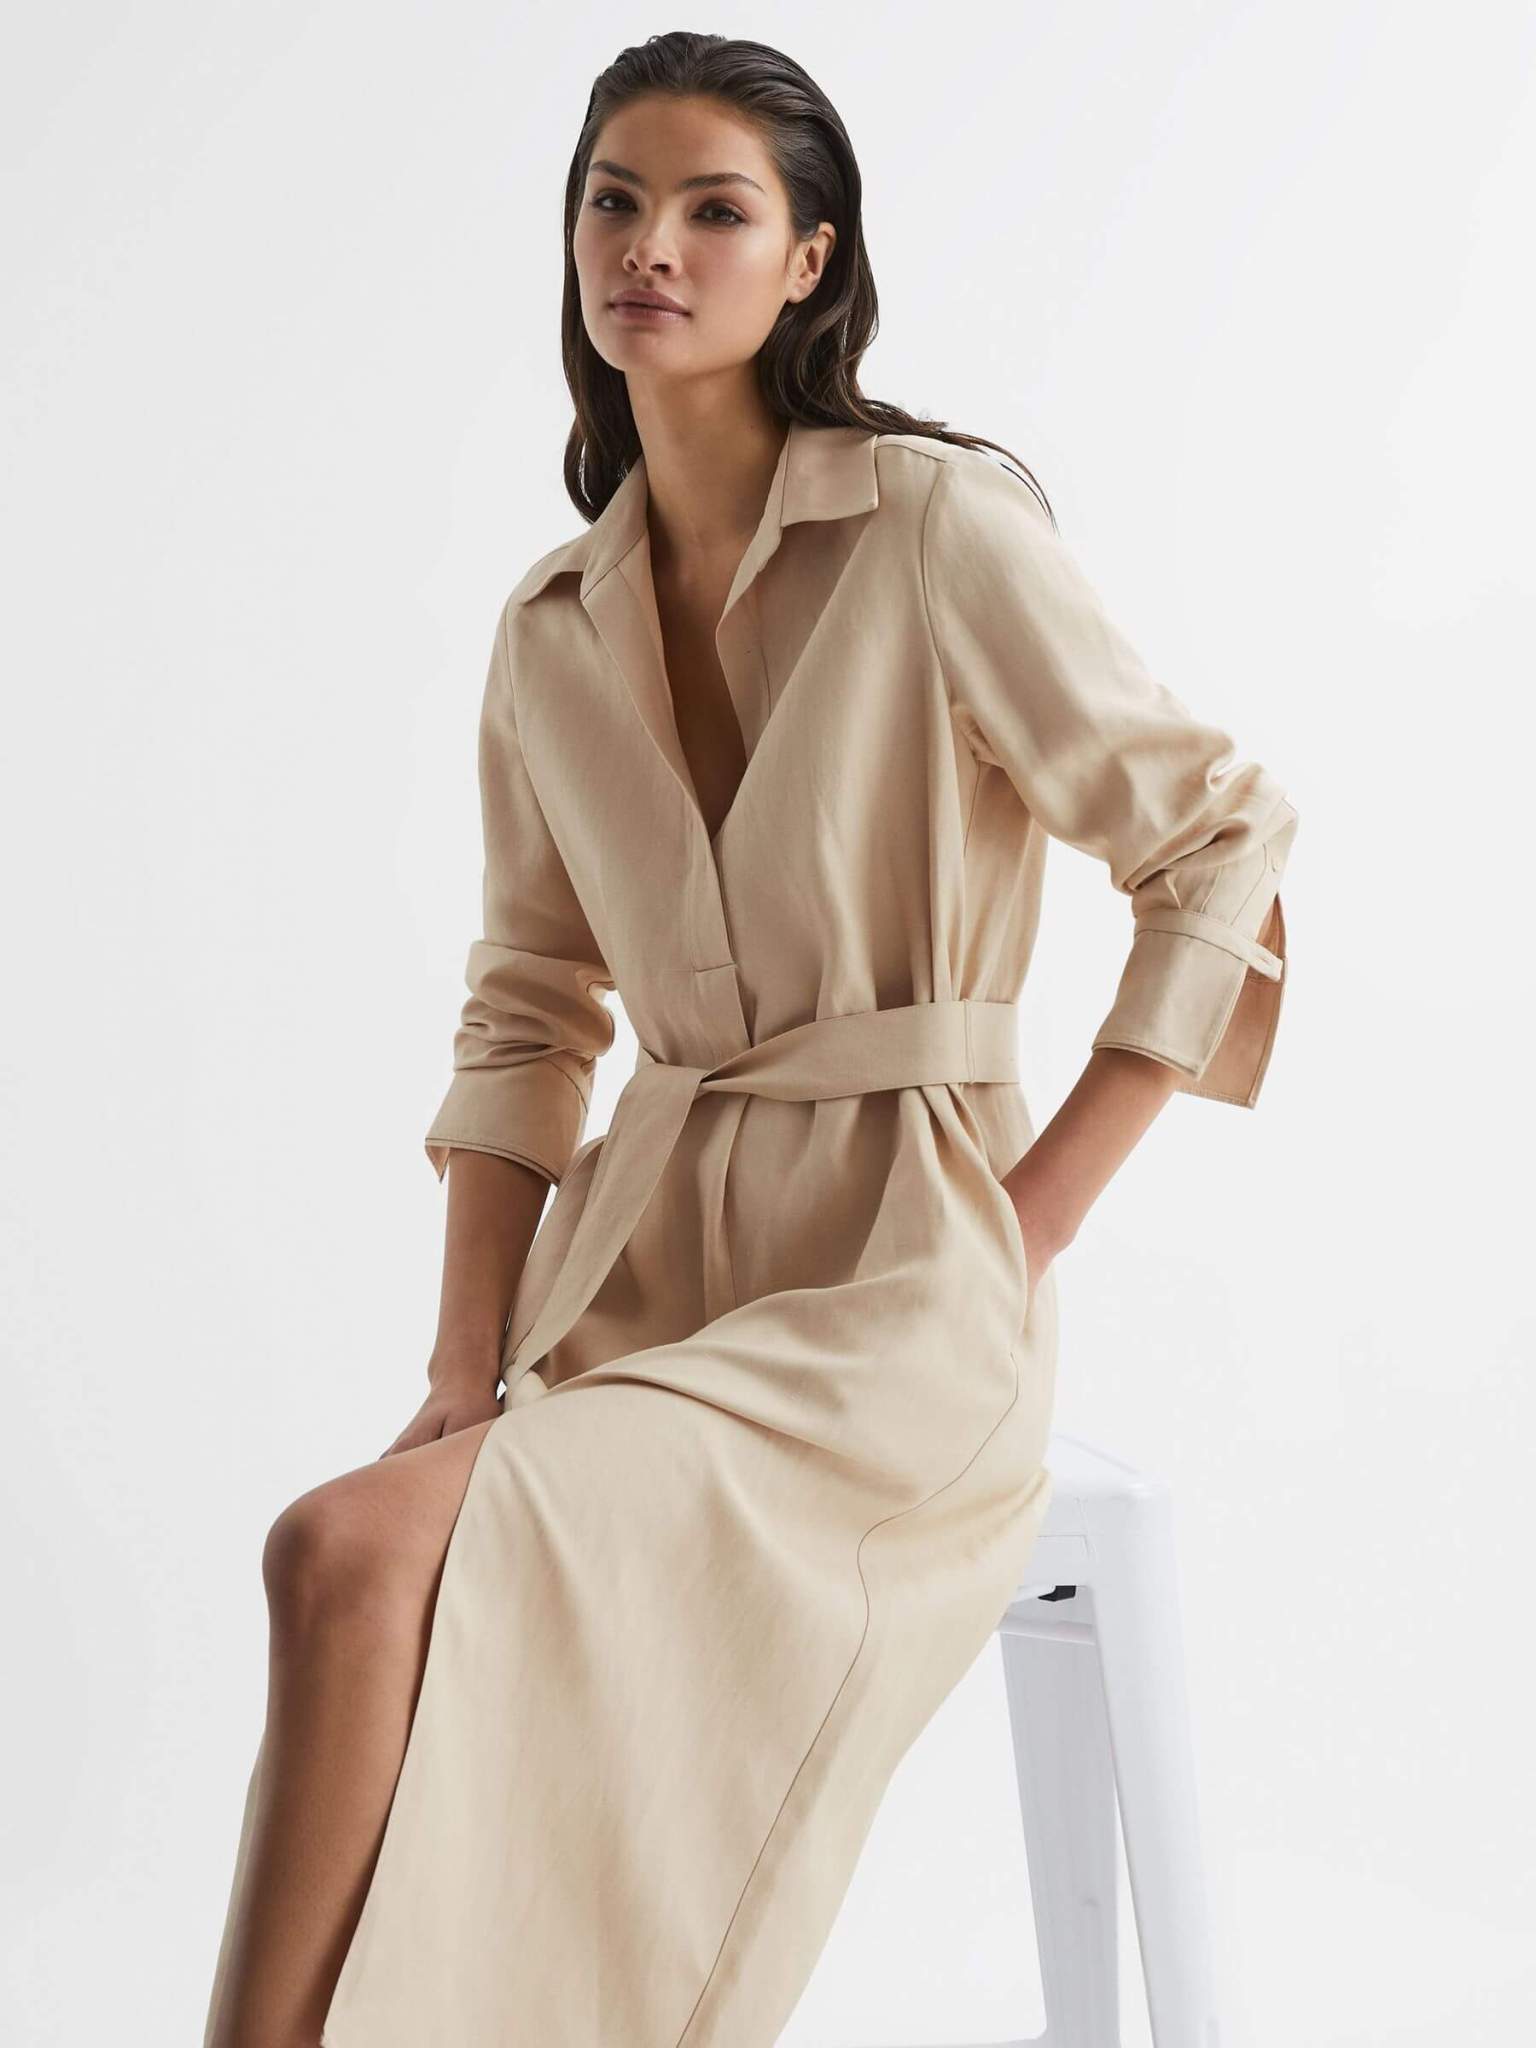 Phoenix, Linen blend midi dress, £298 – Buy now reiss